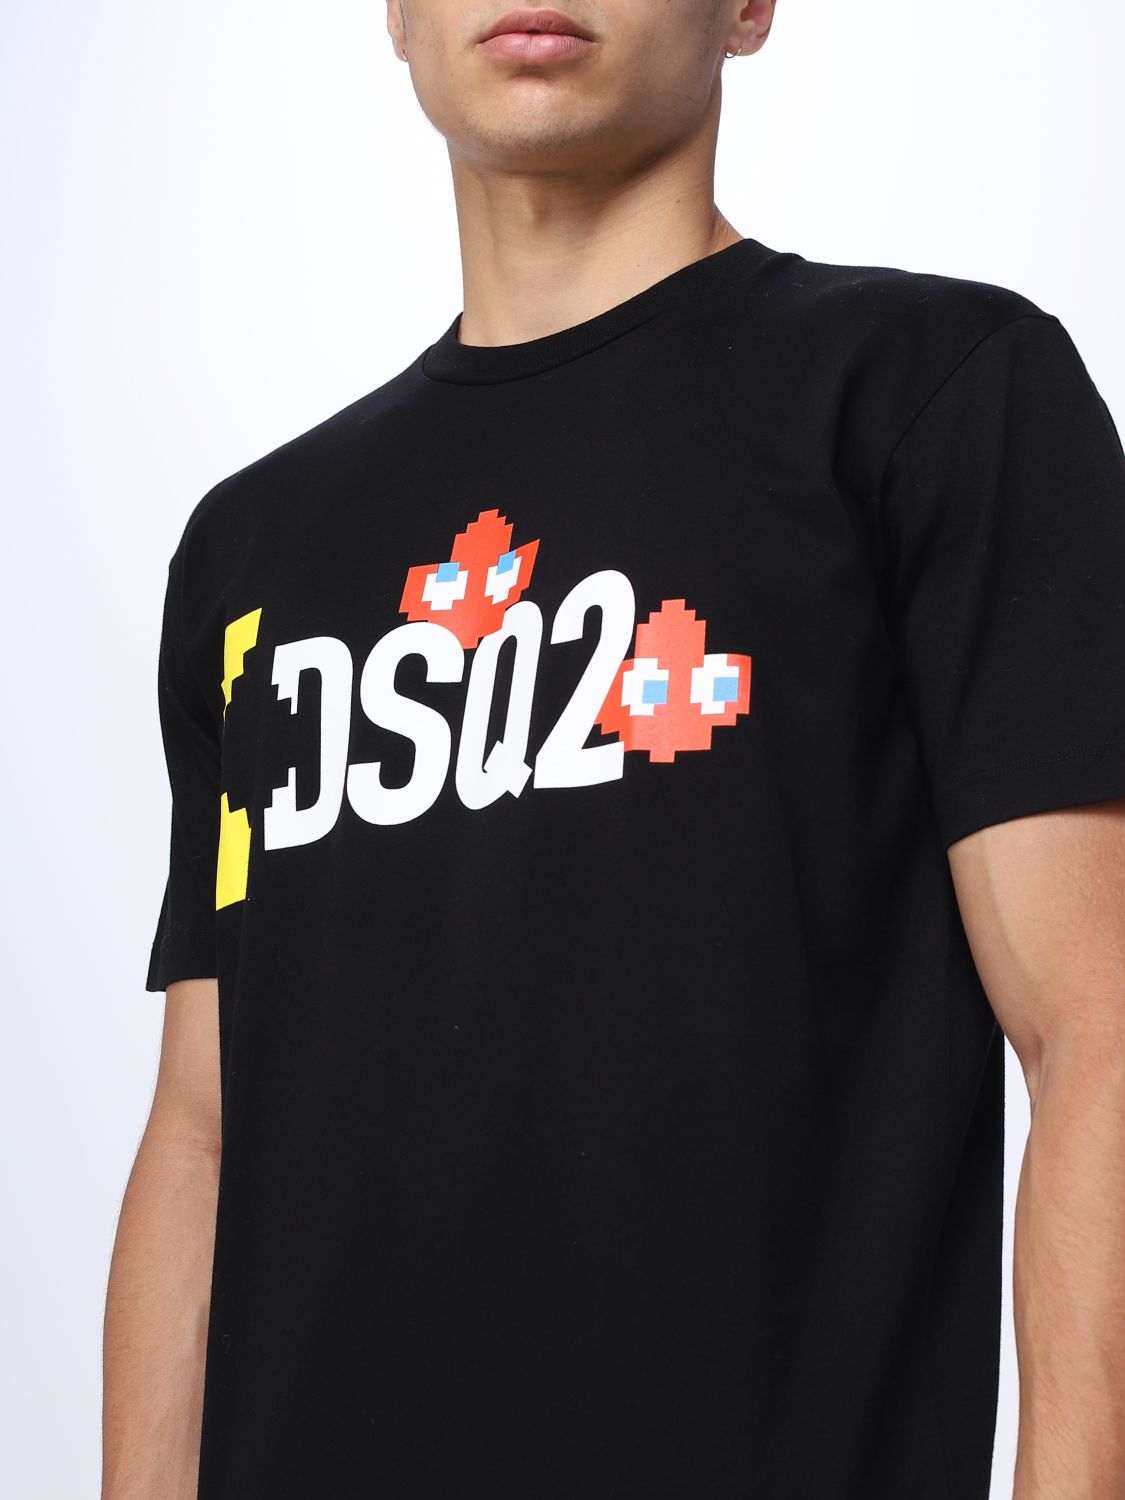 DSQUARED2 T-SHIRT: T-shirt Pac-Man x in cotone, T-Shirt Dsquared2 uomo -  S71GD1351S23009 Nero